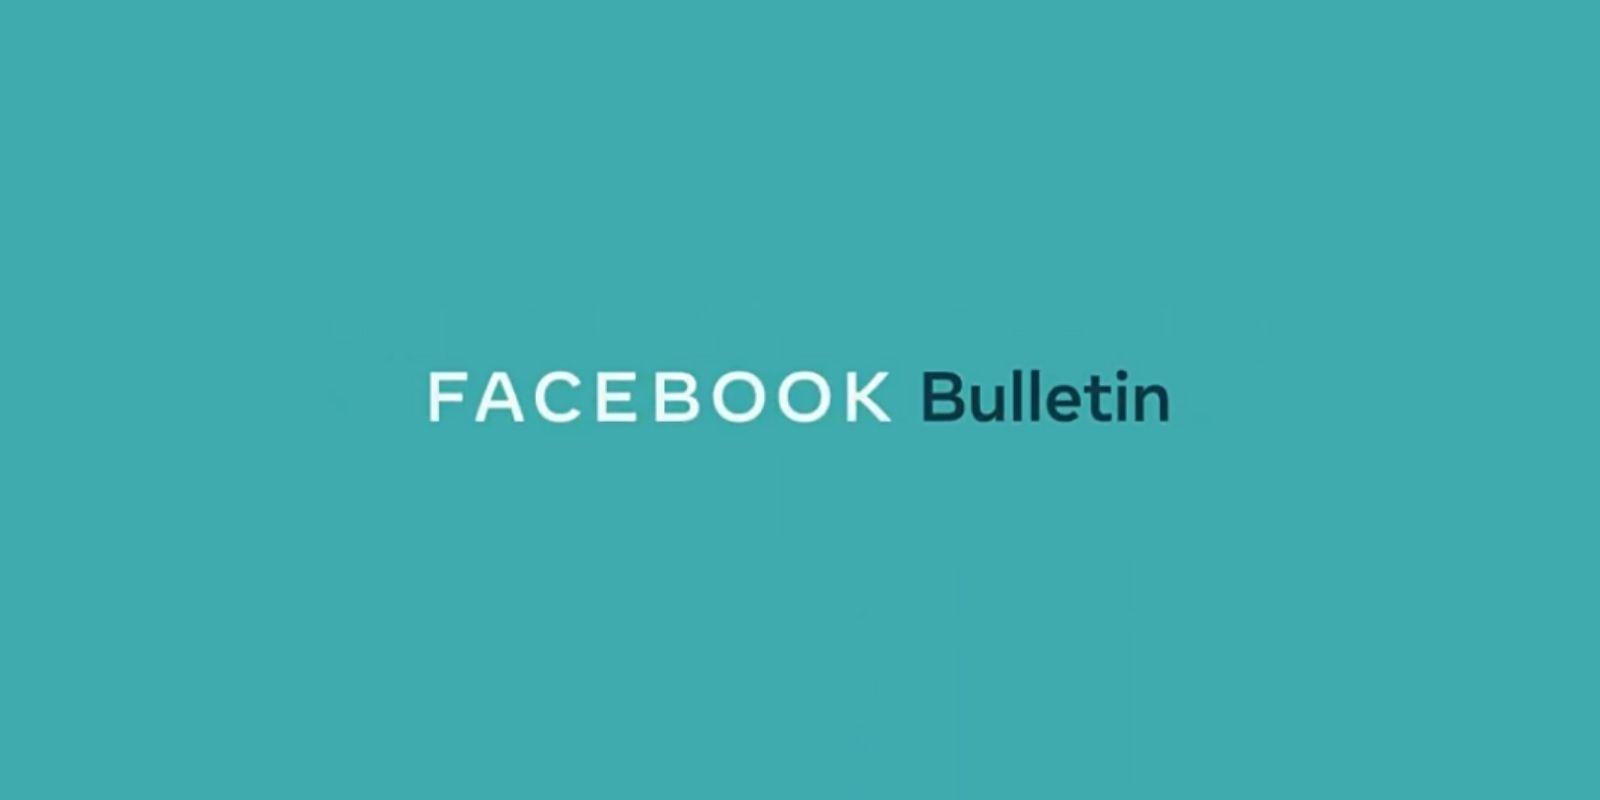 Facebook Launches newsletter platform "Bulletin"_40.1